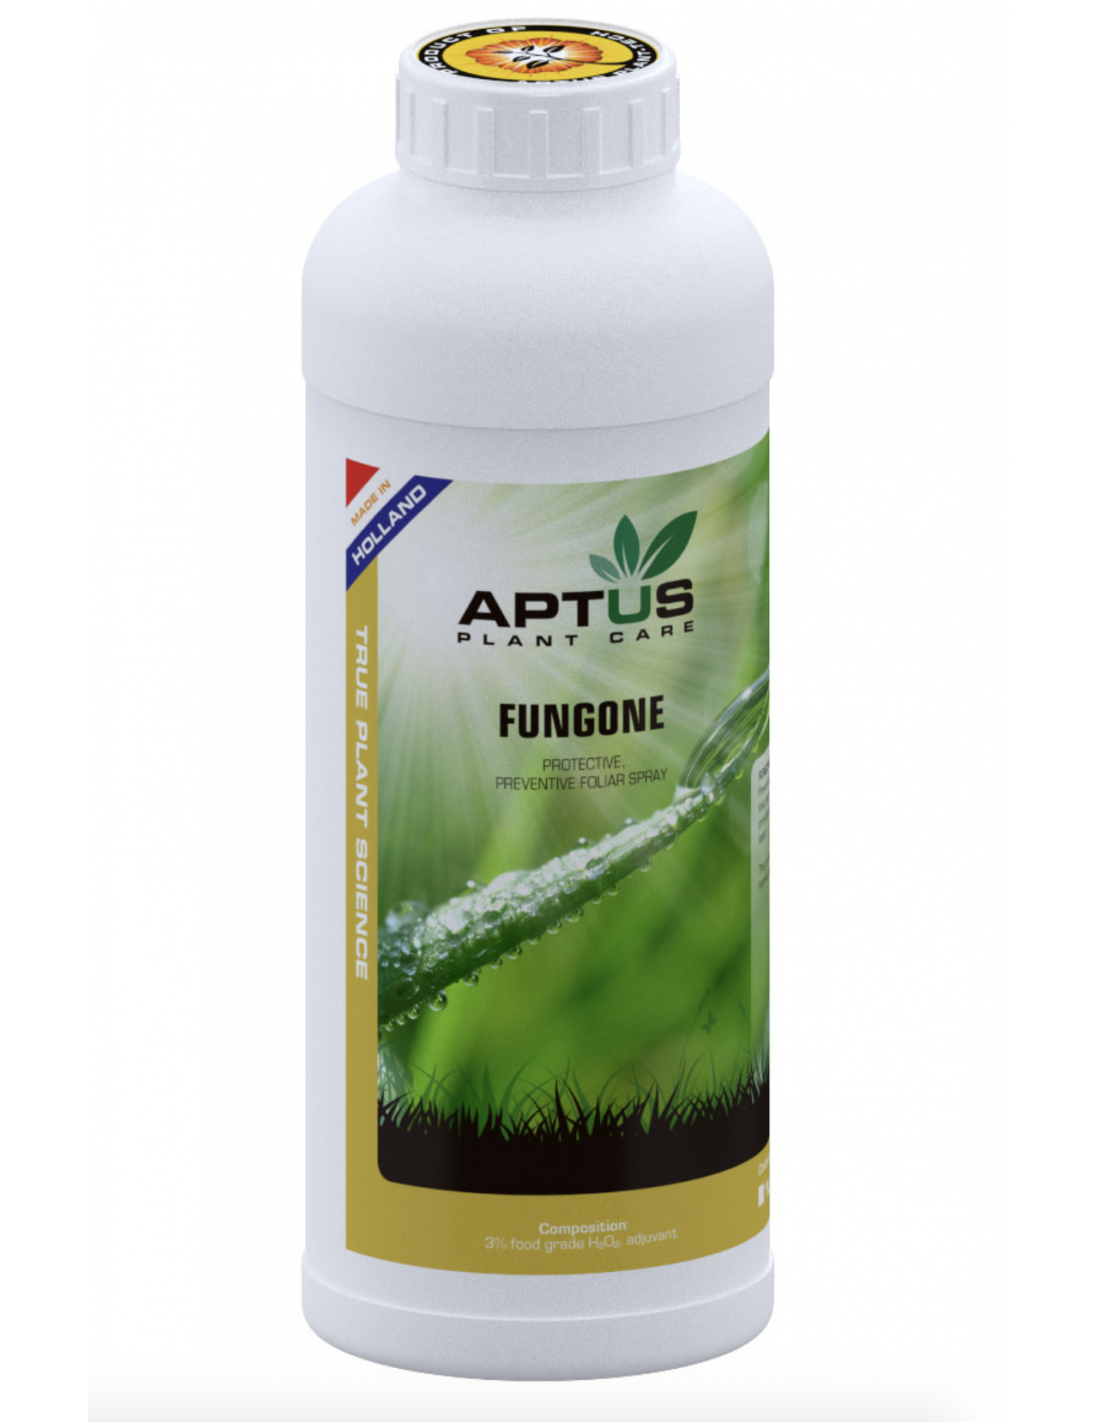 Aptus Fungone Ready-to-Use -1 liter